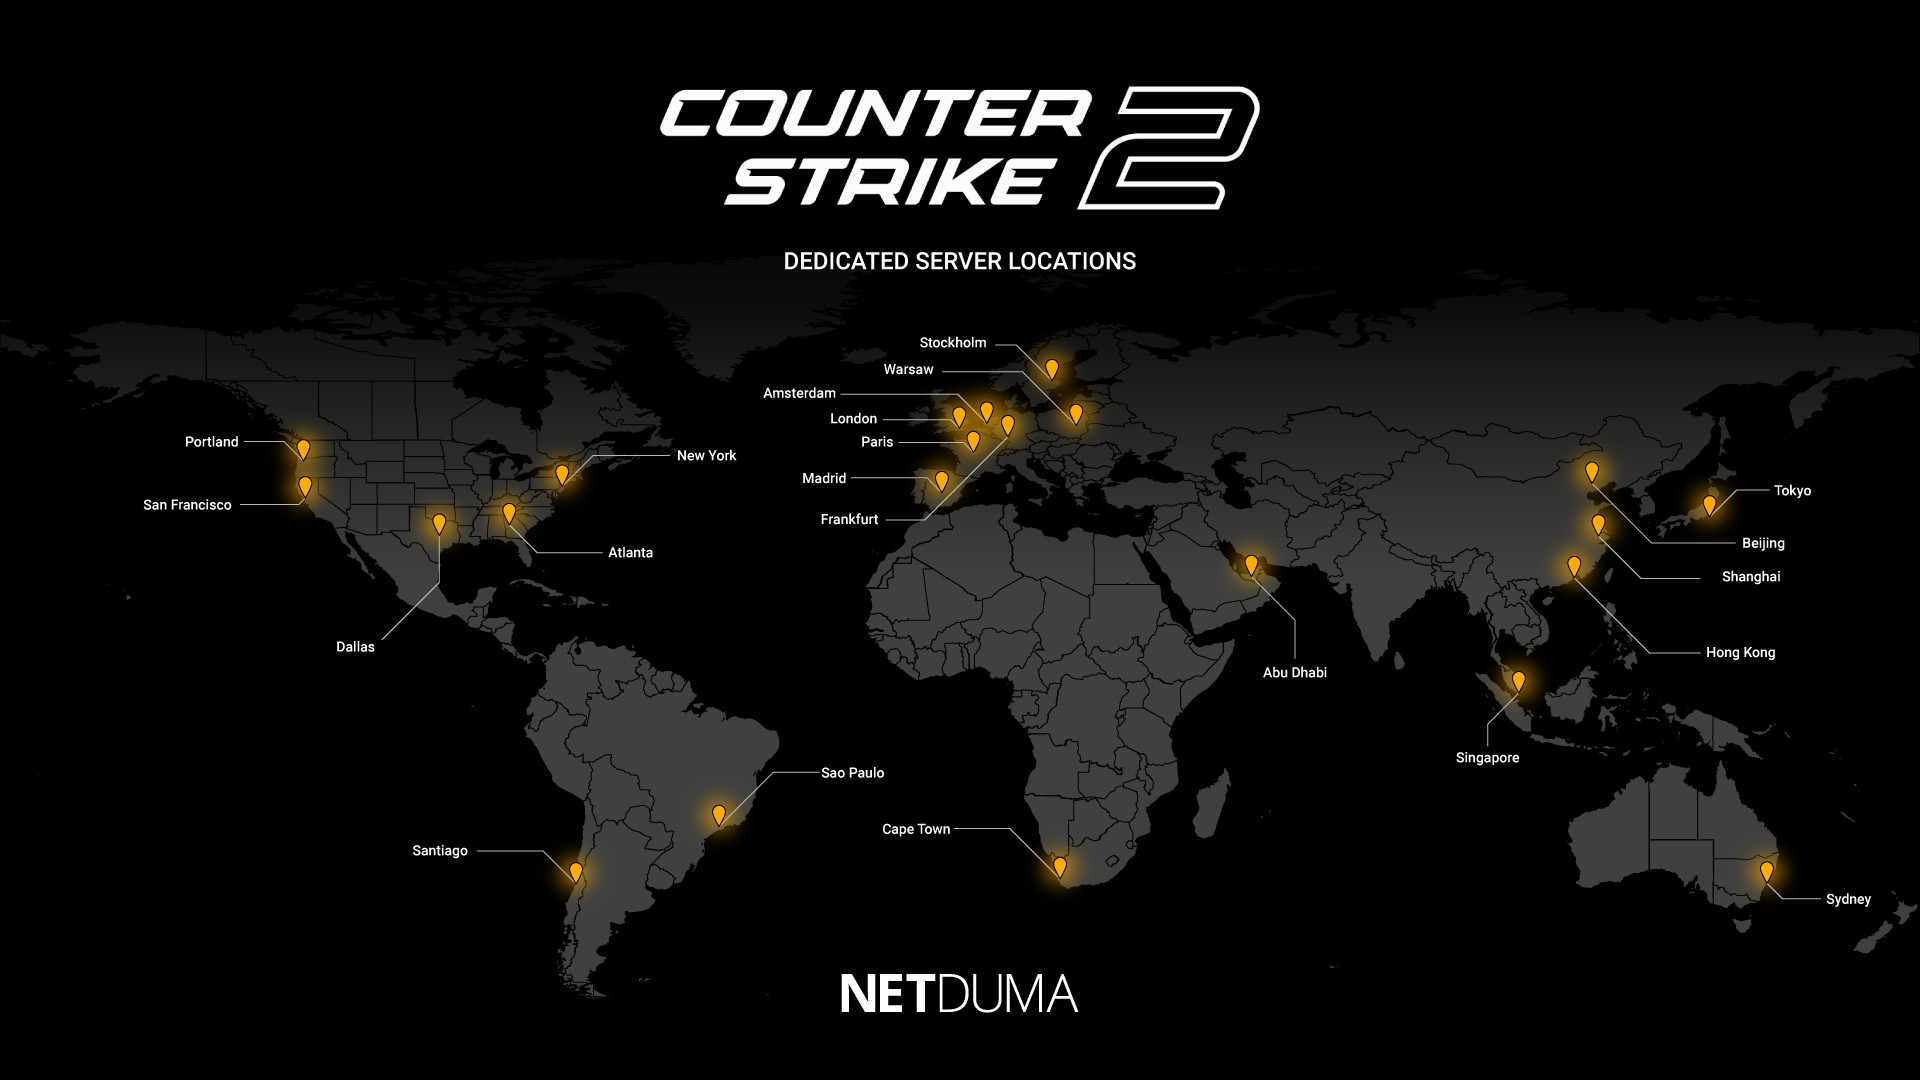 Counter Strike 2 dedicated server locations